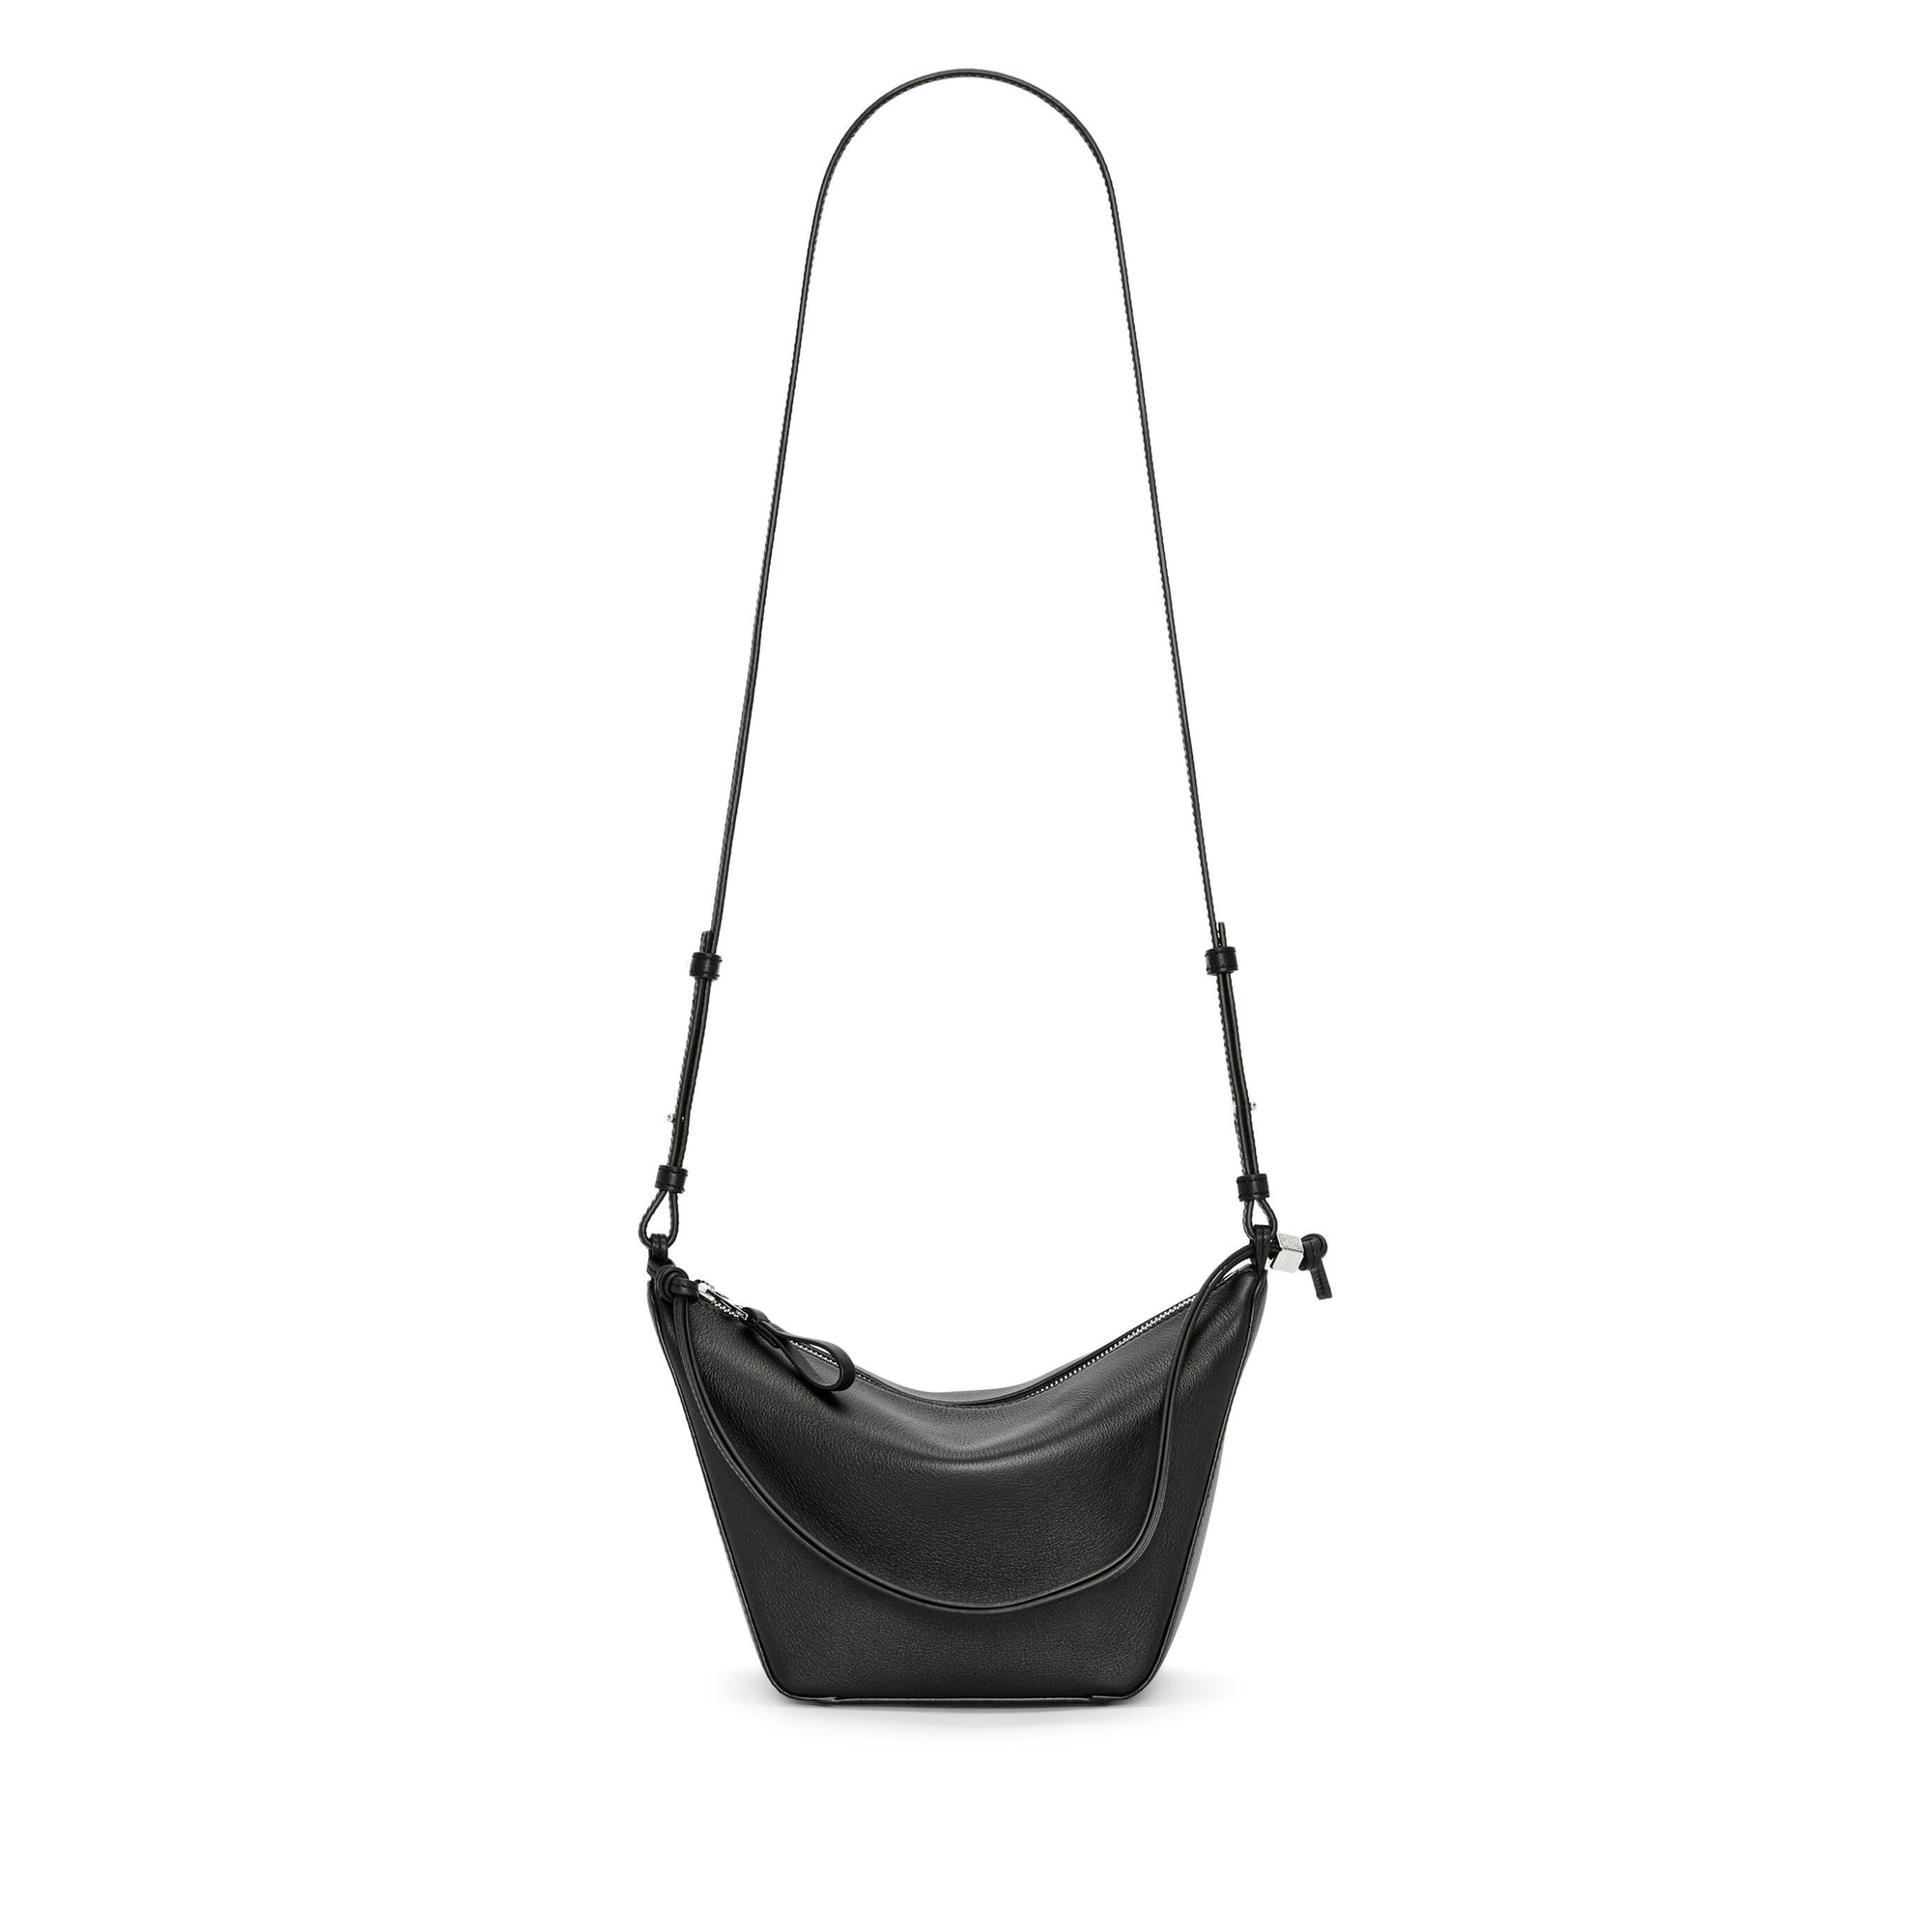 Loewe - Women’s Mini Hammock Bag  - (Black) view 2